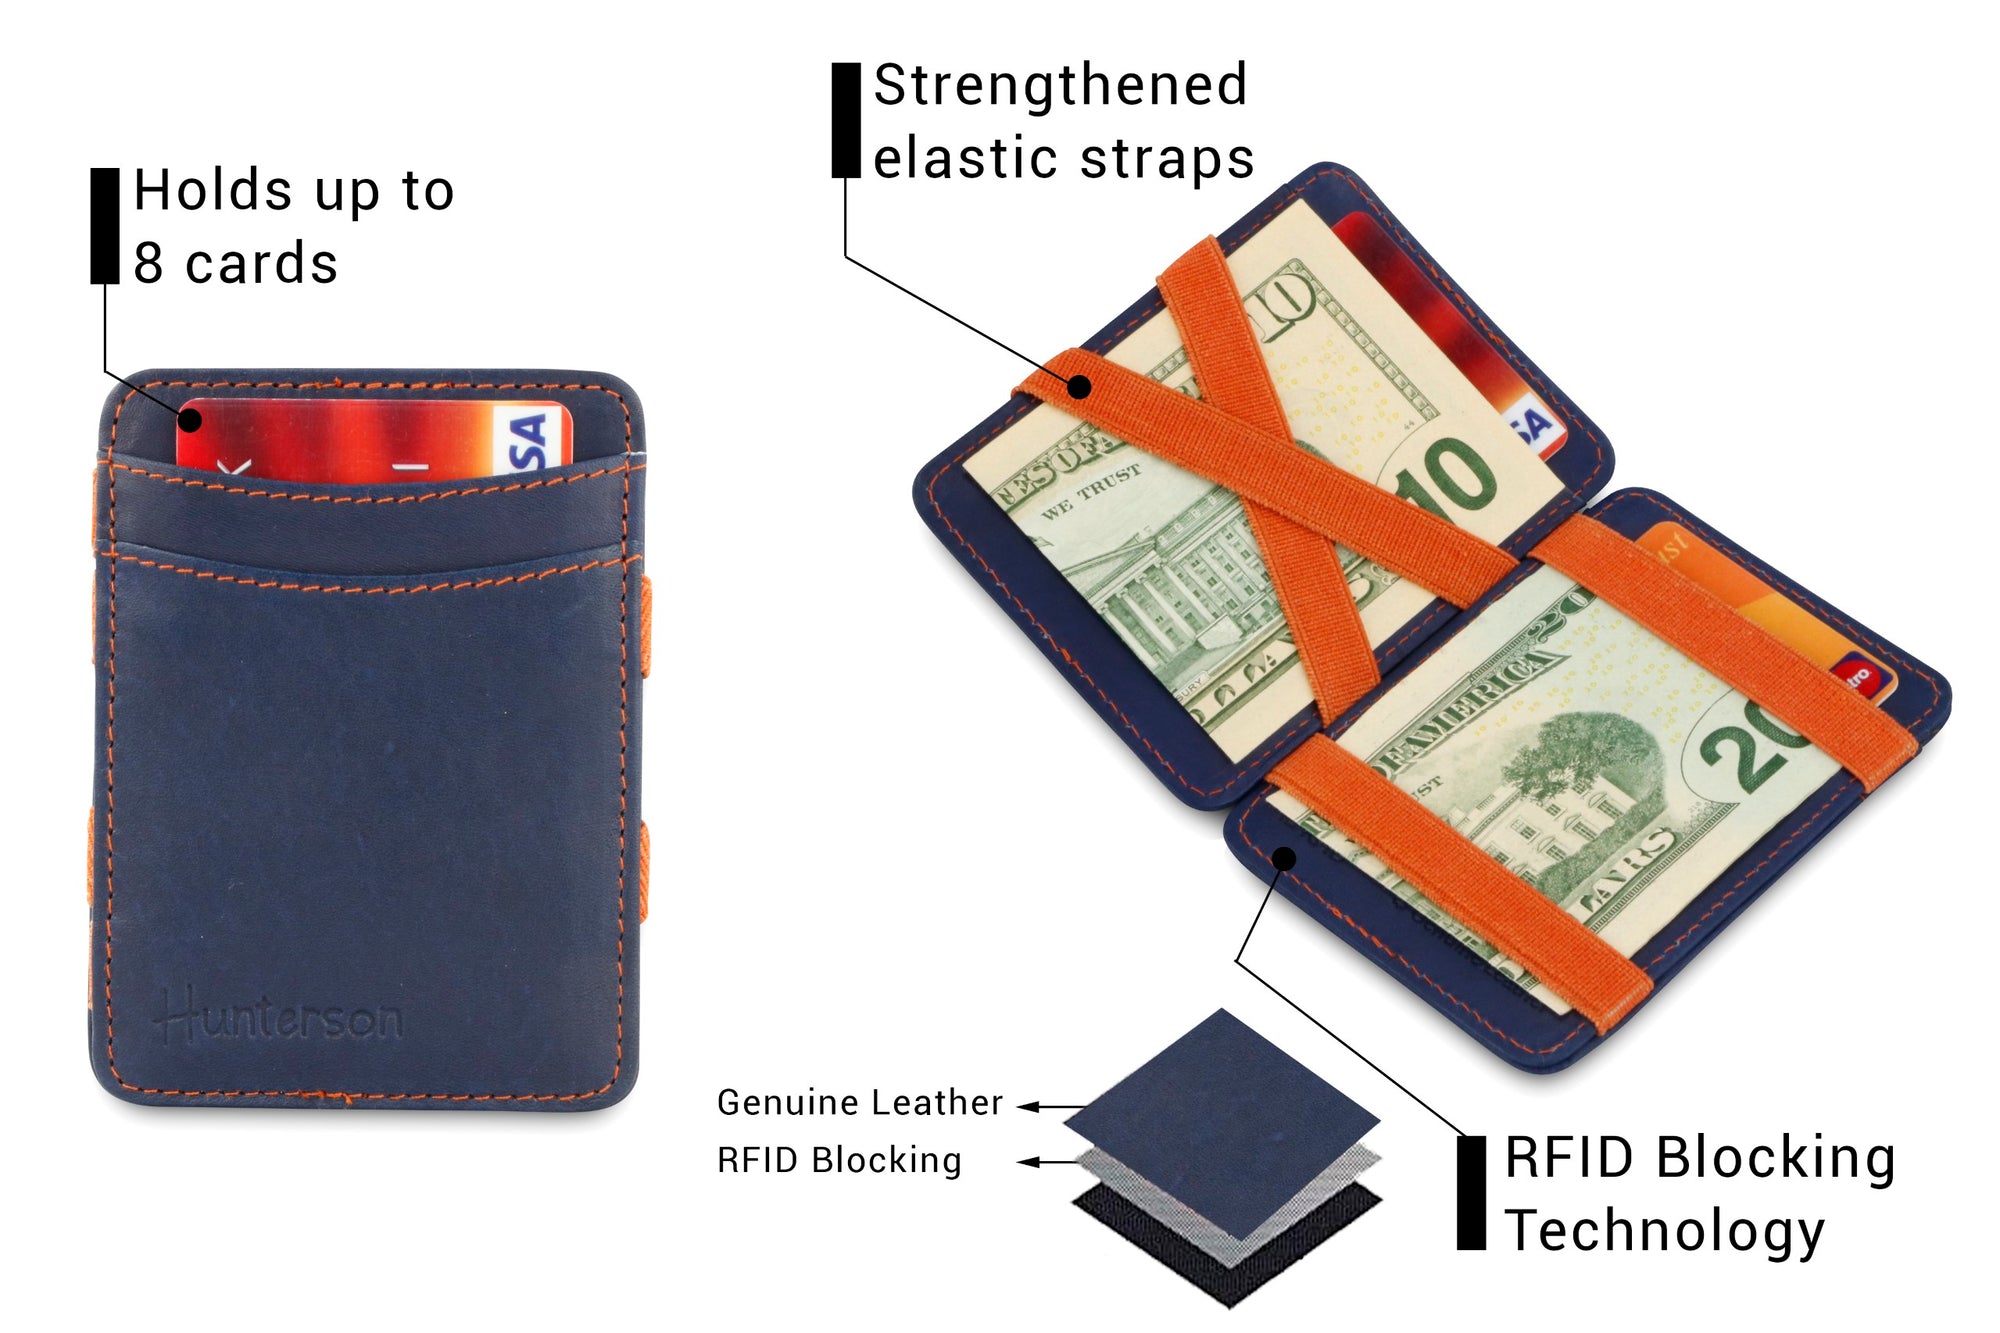 Magic Wallet RFID Hunterson - Blue-Orange - 3